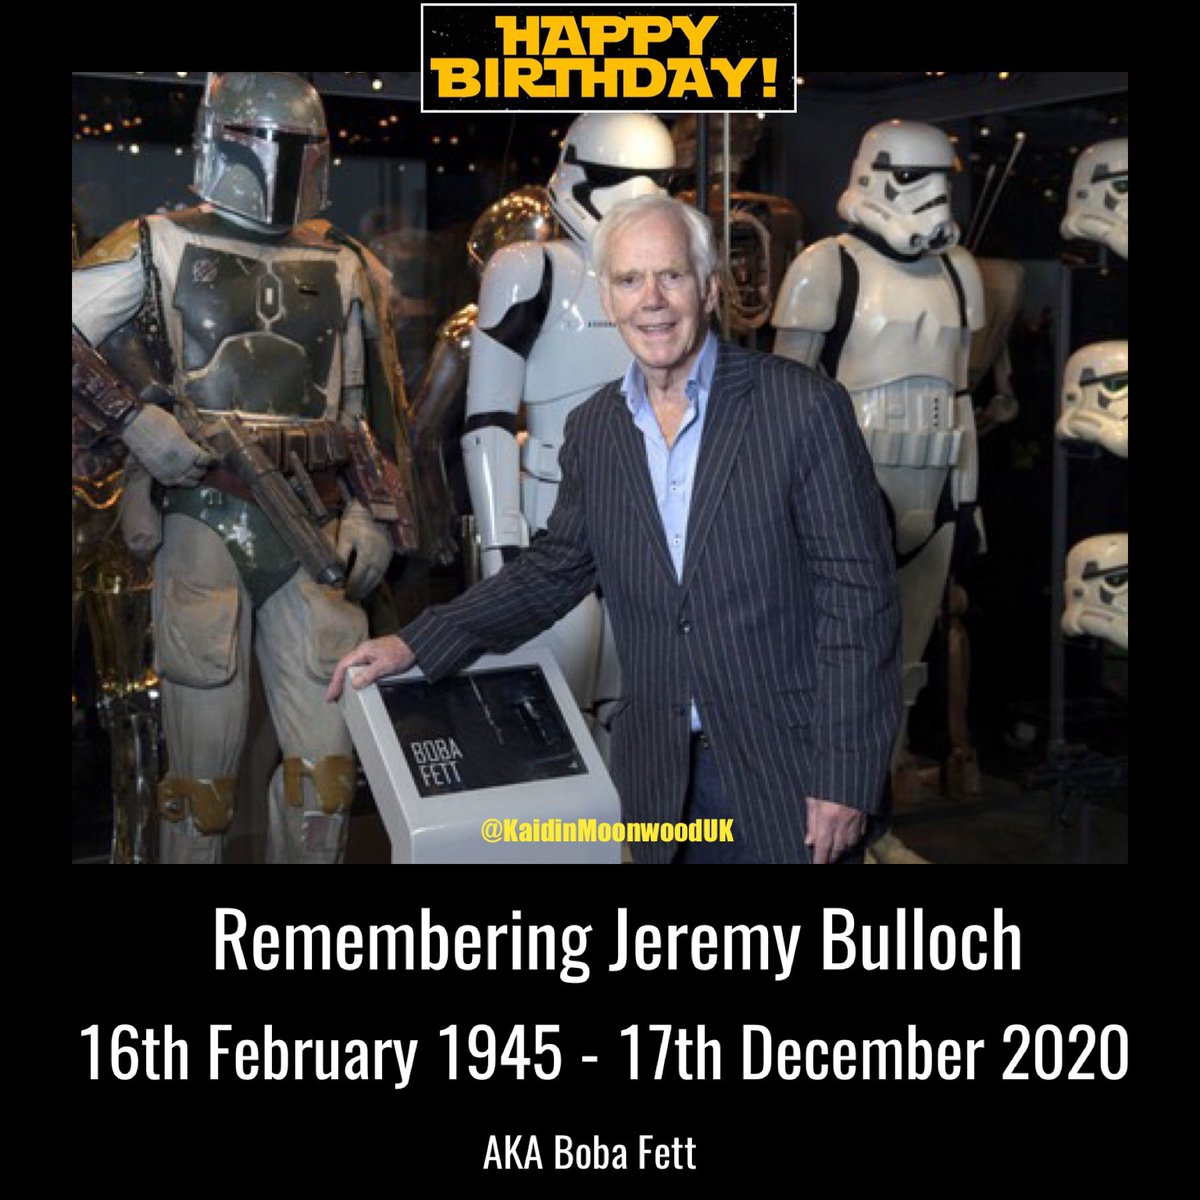 Remembering Jeremy Bulloch aka Boba Fett.
16th February 1945 to 17th December 2020.
#StarWarsBirthday #JeremyBulloch #BobaFett #StarWars #TheEmpireStrikesBack #ReturnOfTheJedi #AtOneWithTheForce
starwars.wikia.com/wiki/Jeremy_Bu…